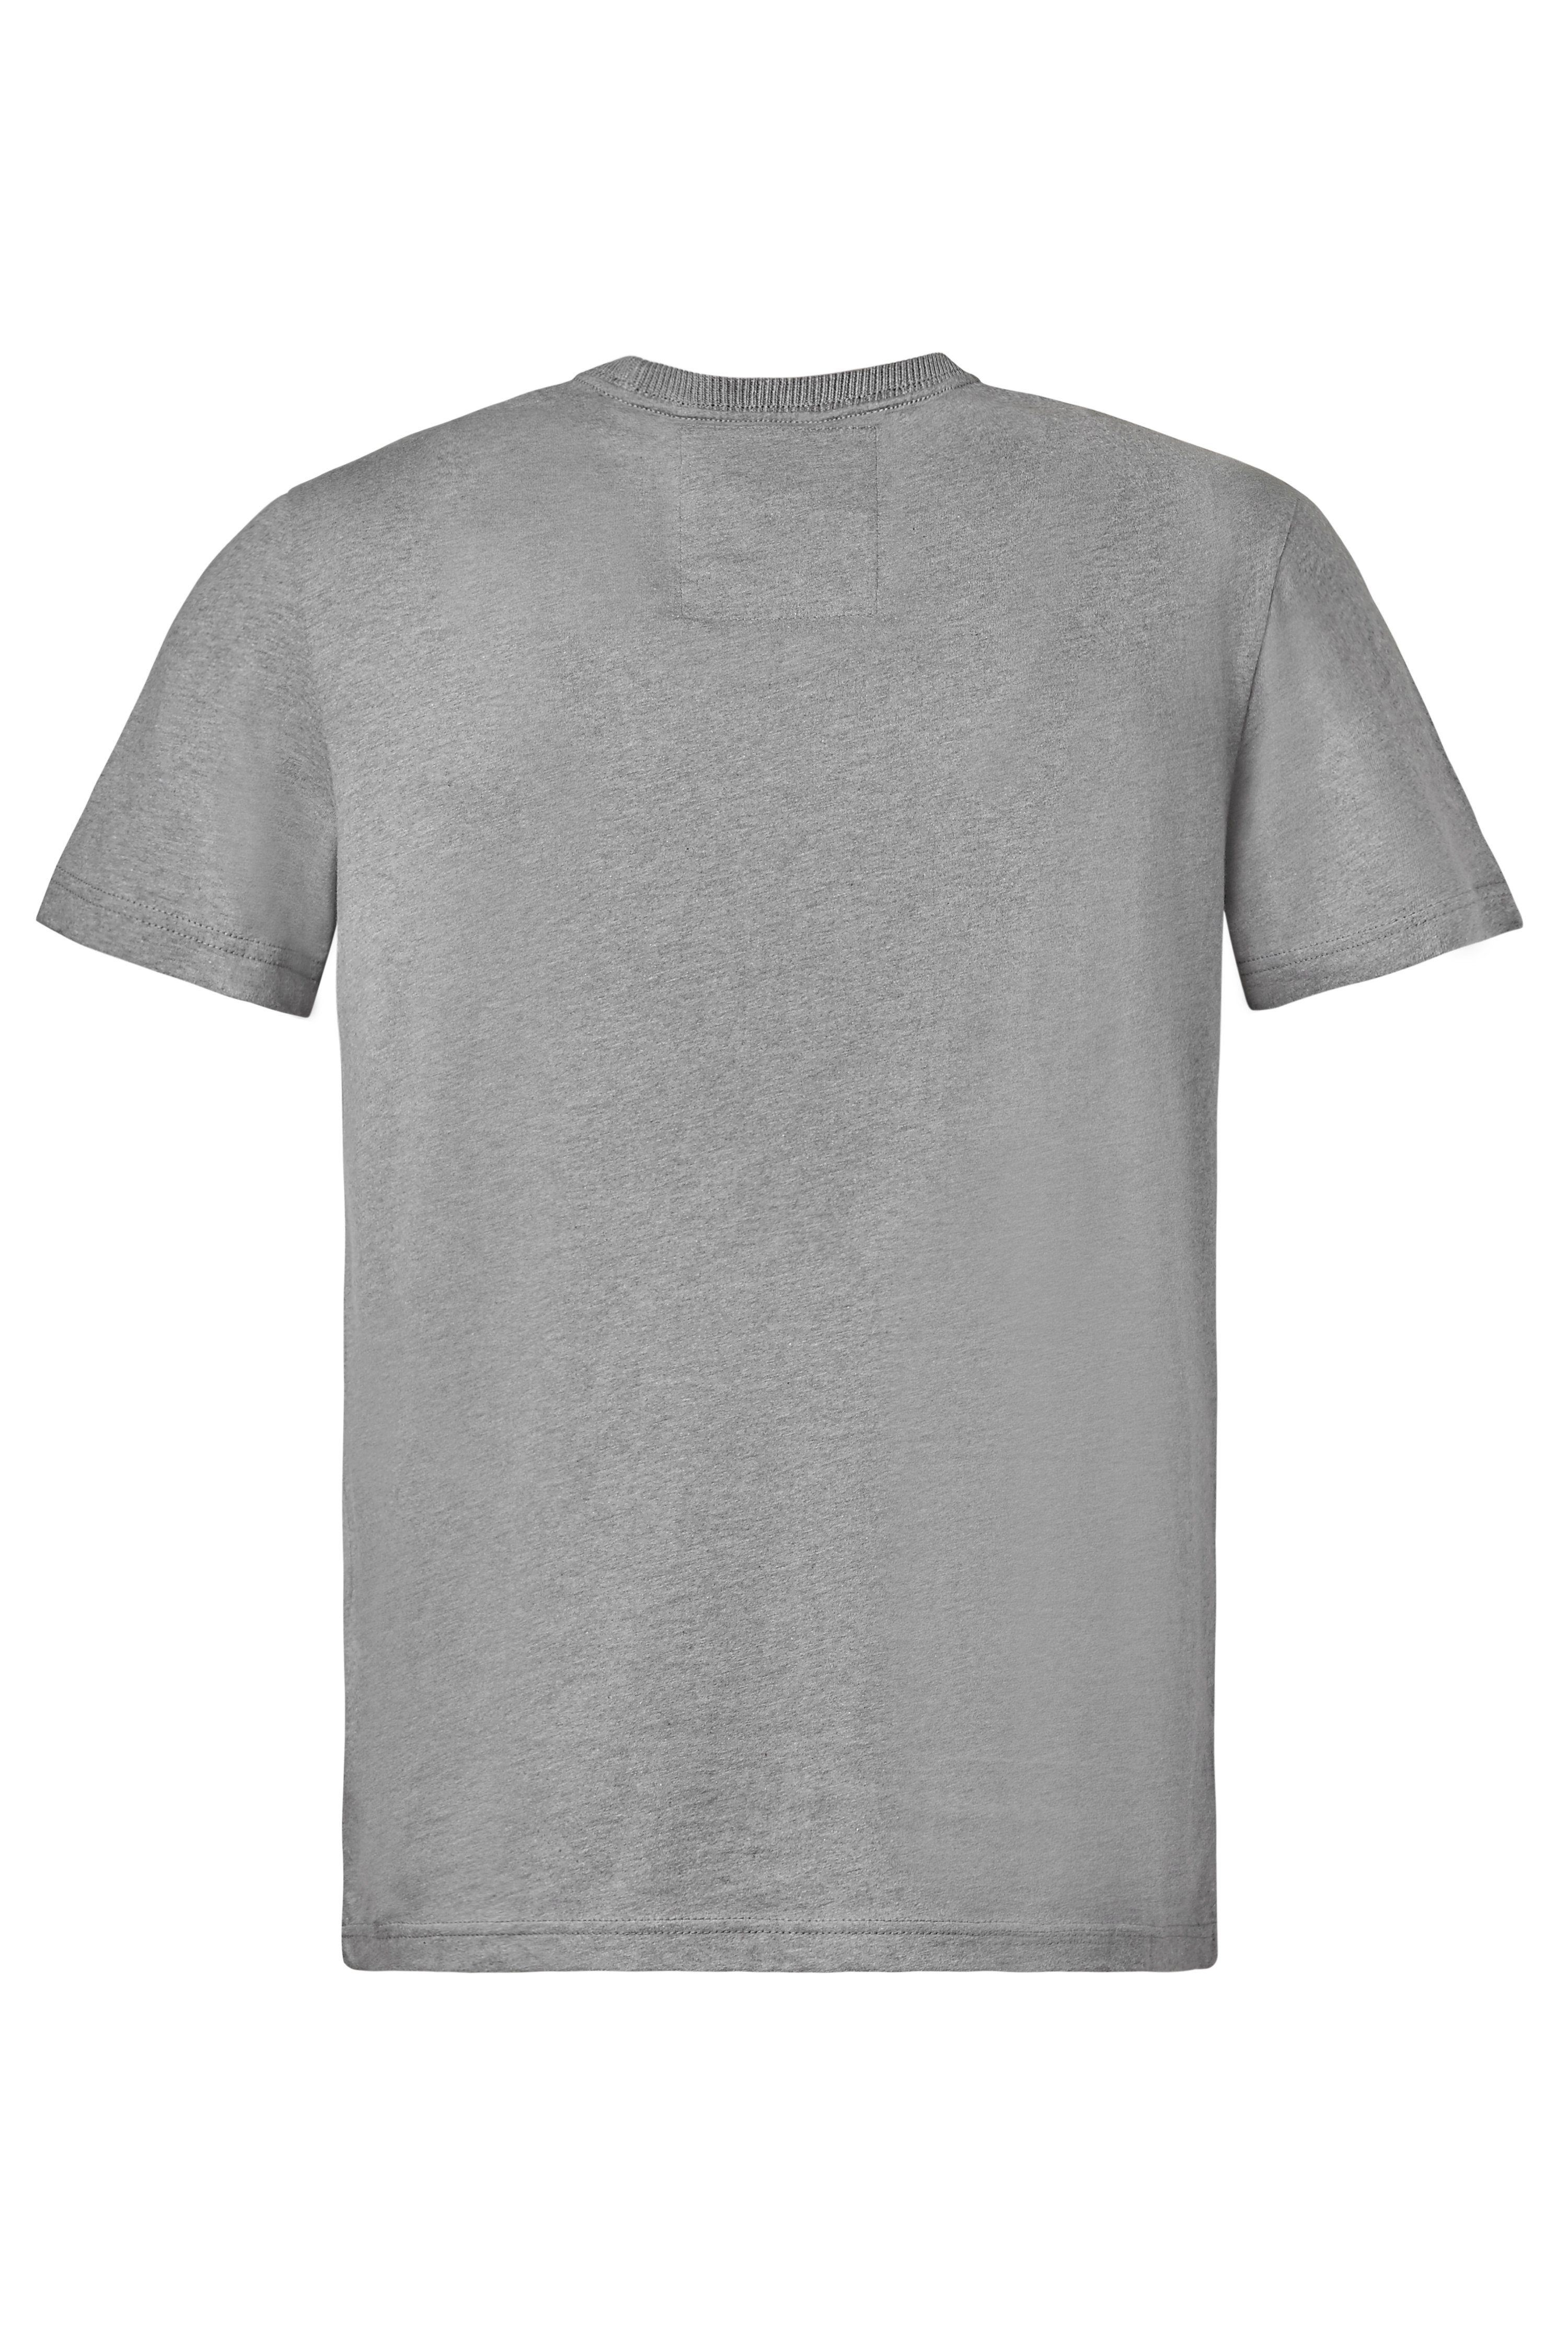 Cordon Sport 15 melange ALF grey 040 T-Shirt